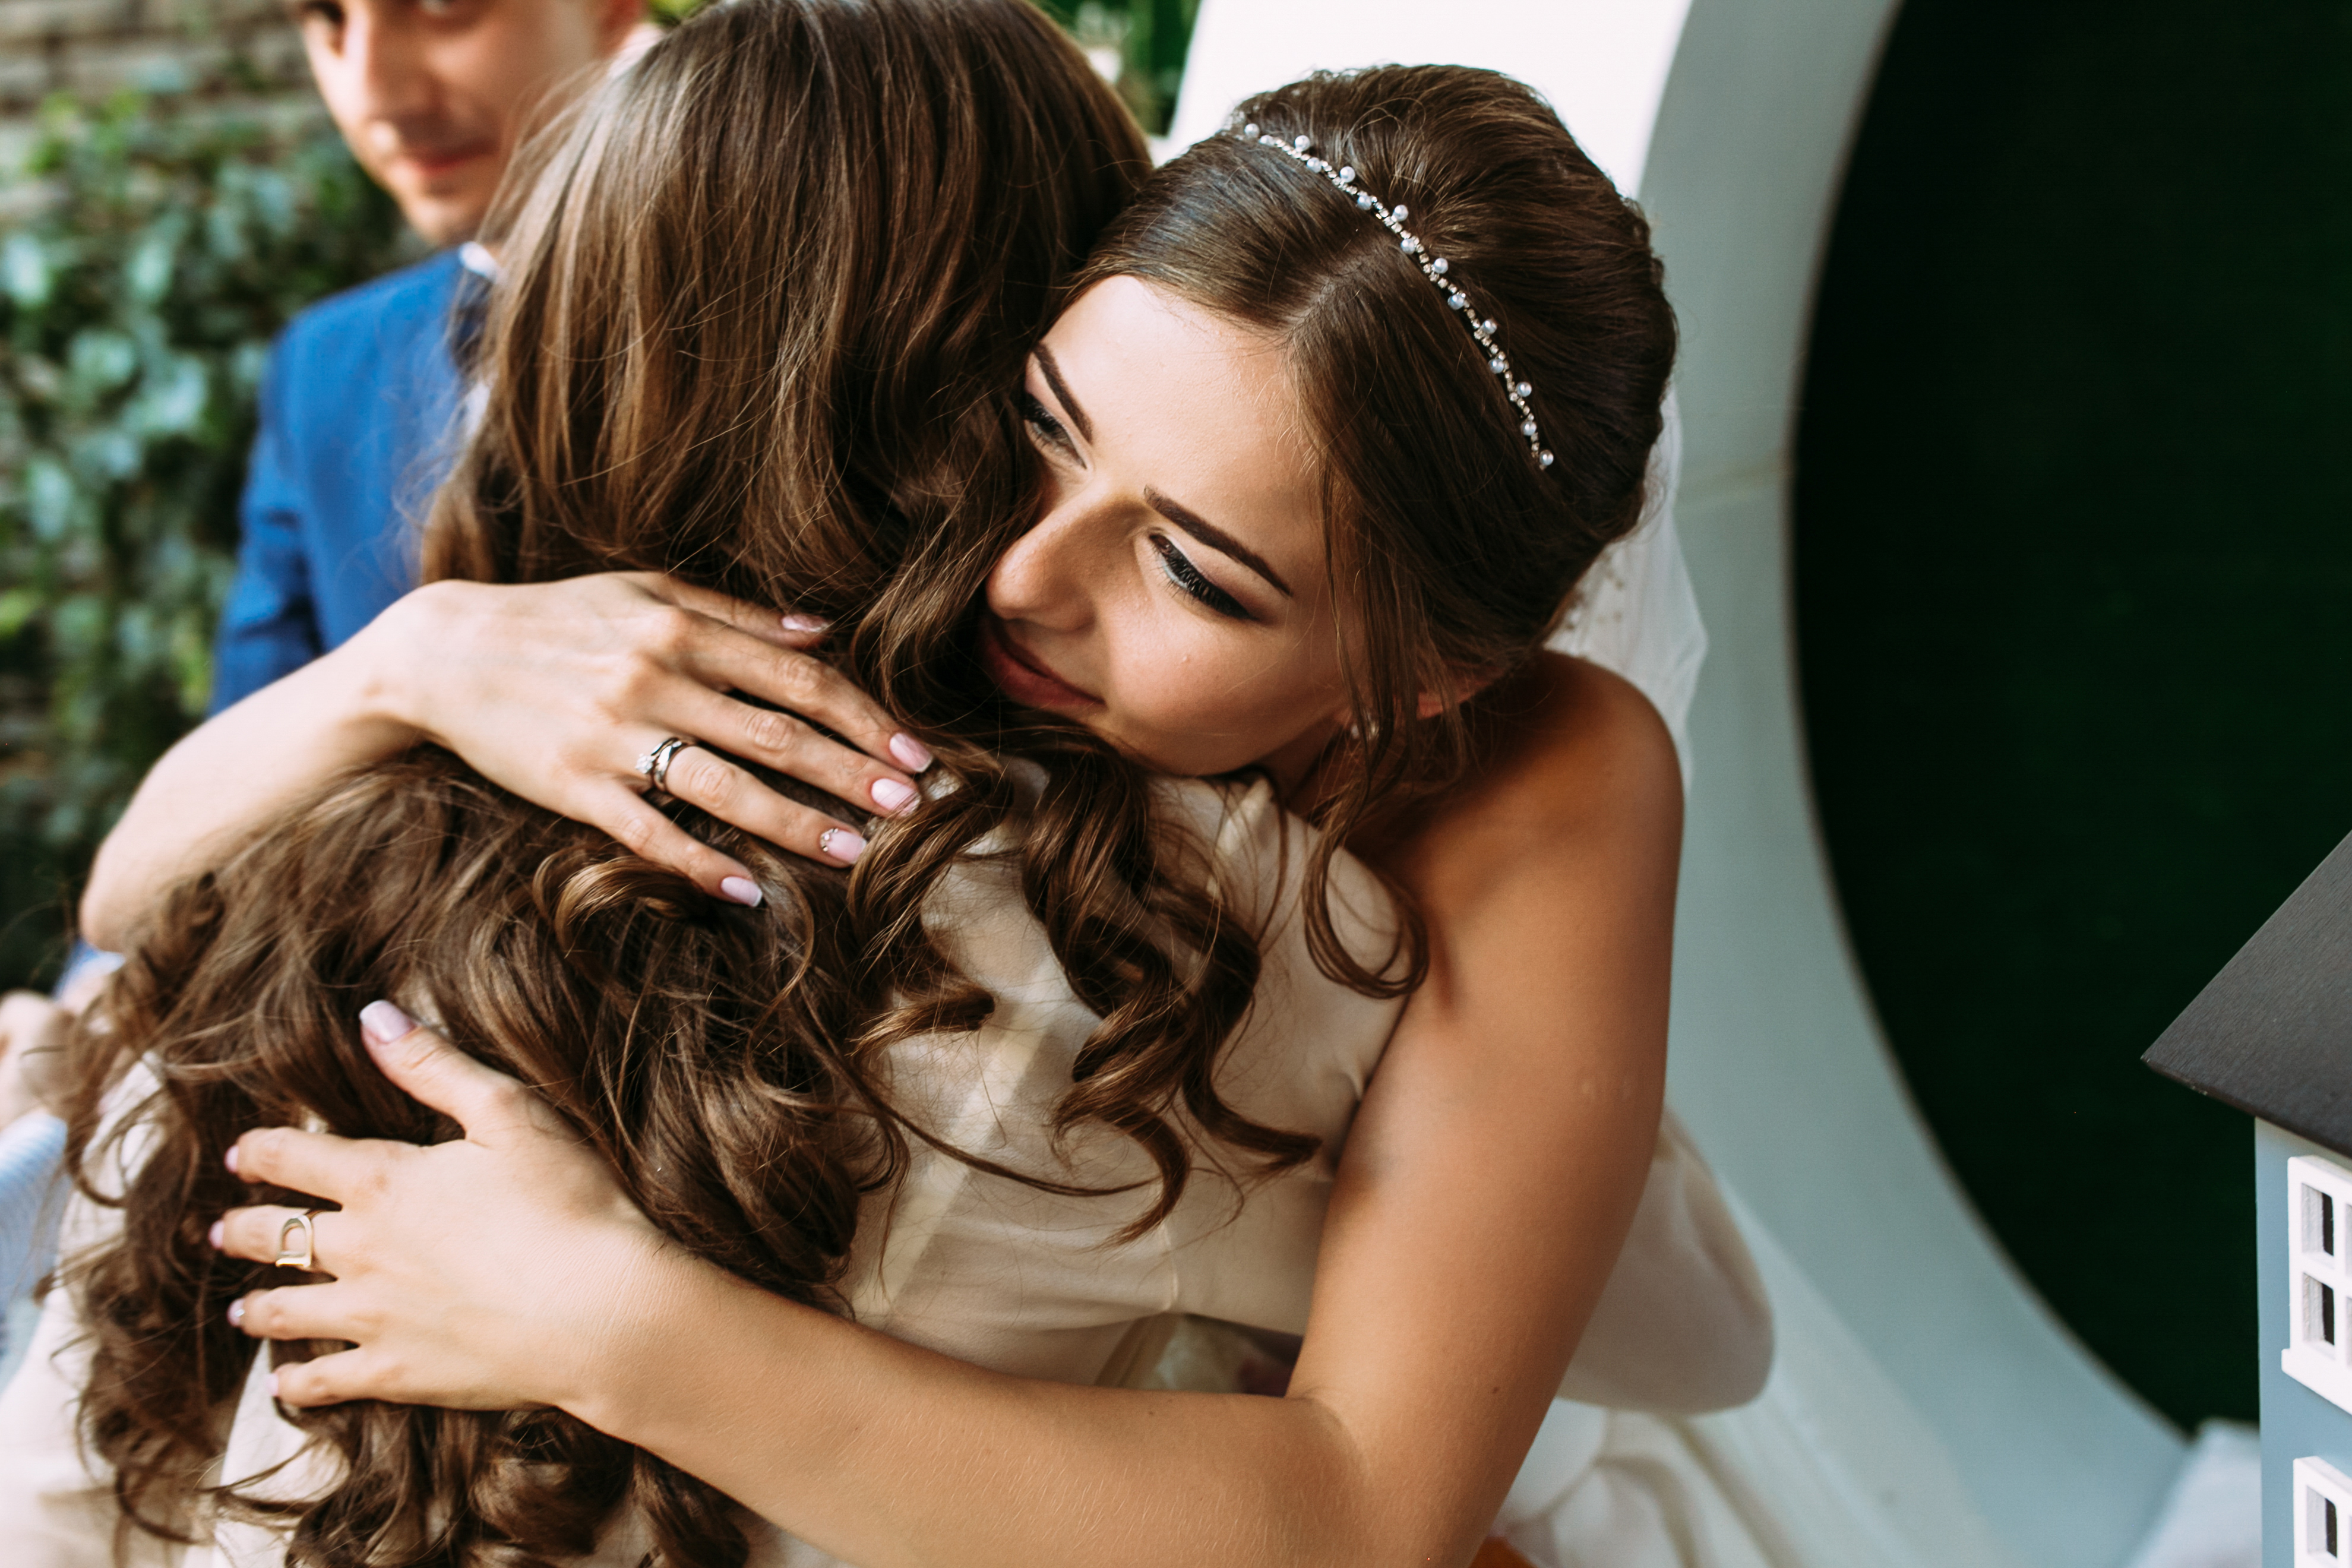 Bride hugging her friend | Source: Shutterstock